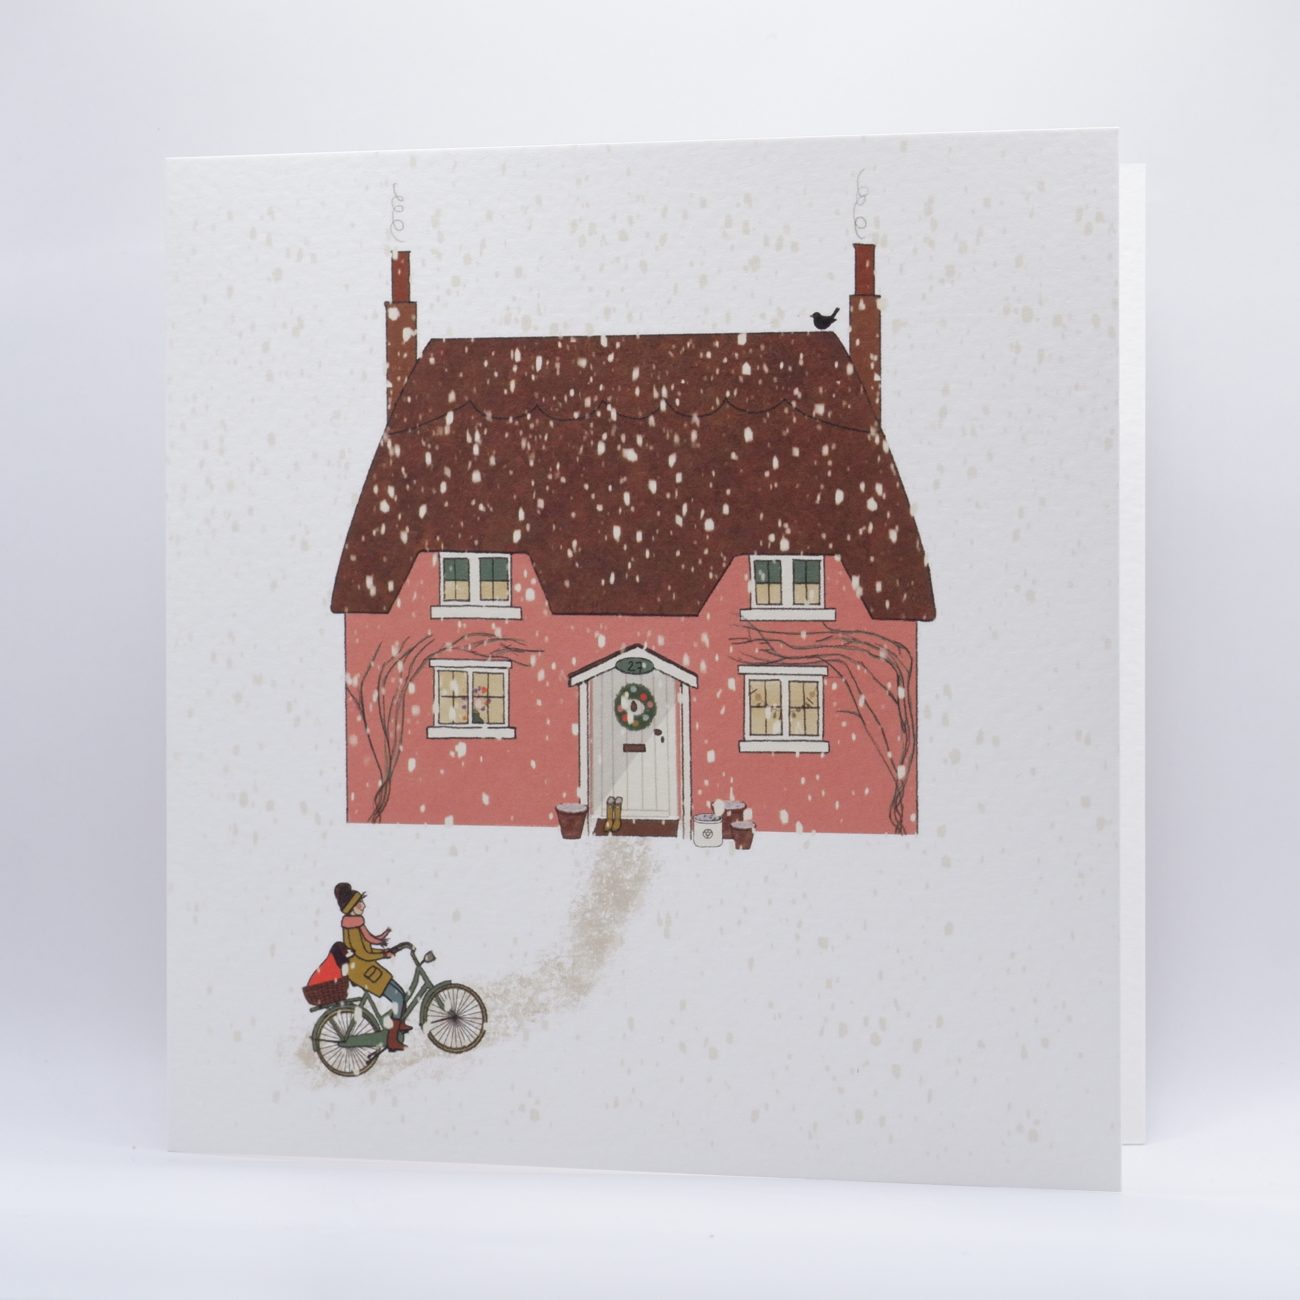 wenskaart-seizoenen-winter-kerst-cottage-huis-roze-slow-living-klein-geluk-Engeland-hond-fiets-pastel